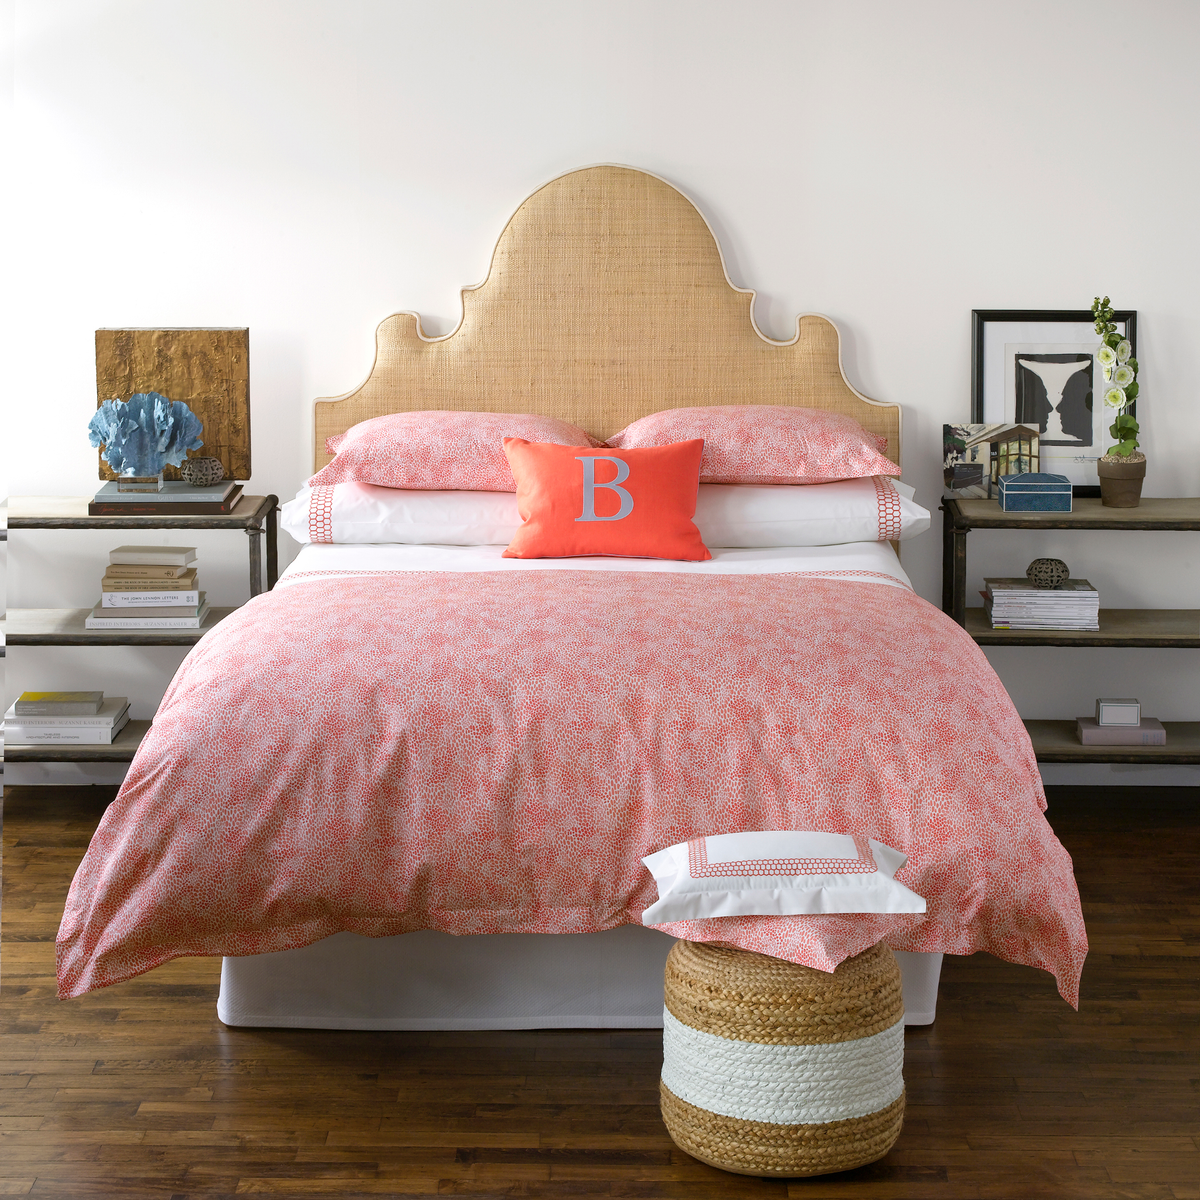 Full Bed Dressed in Lulu DK Matouk Nikita Bedding in Coral Color